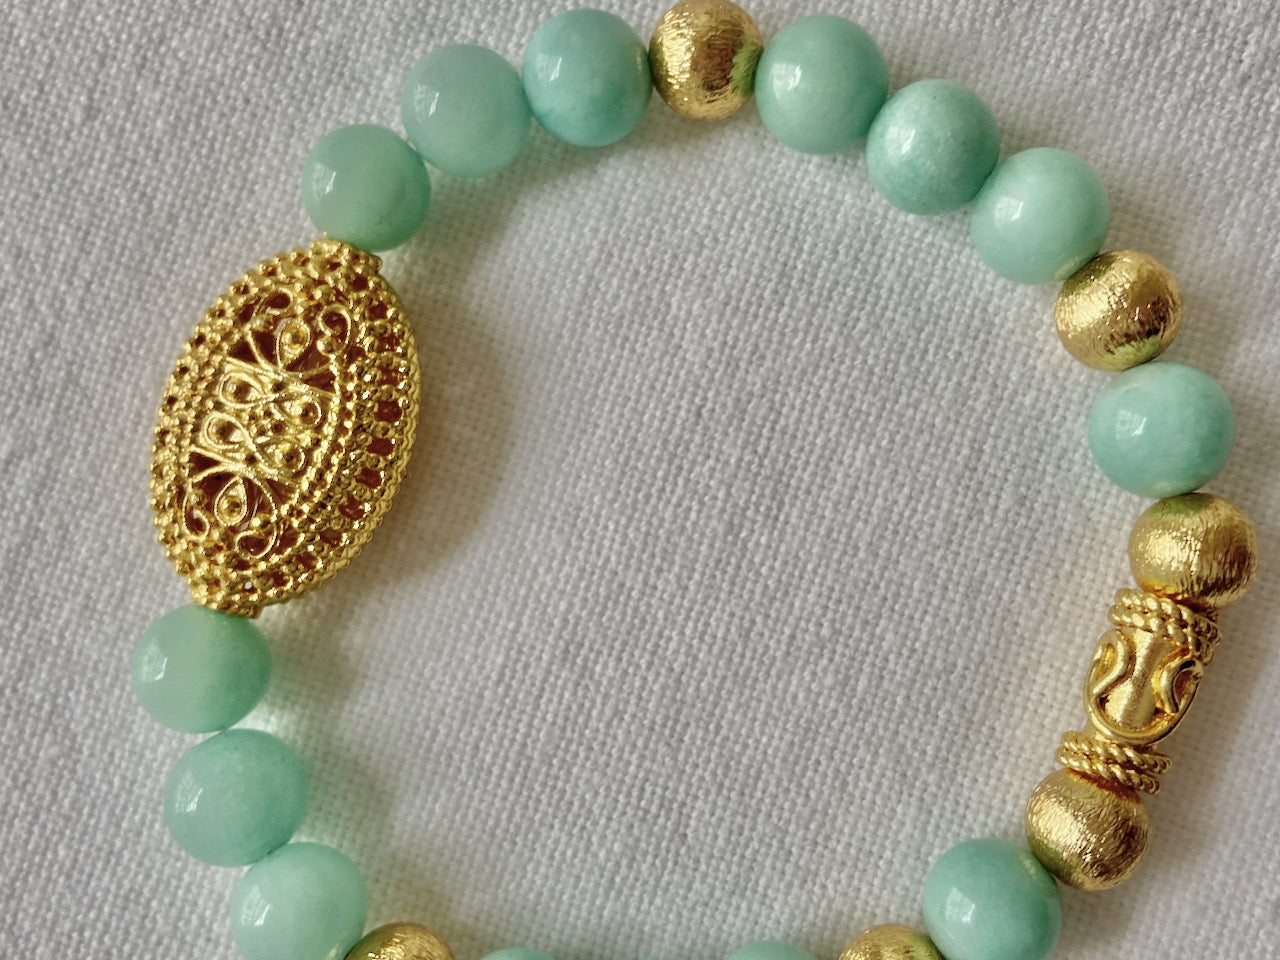 Green "Burma" Jade (Light Green) Gemstone with an 18k Gold Filigree Beaded Bracelet